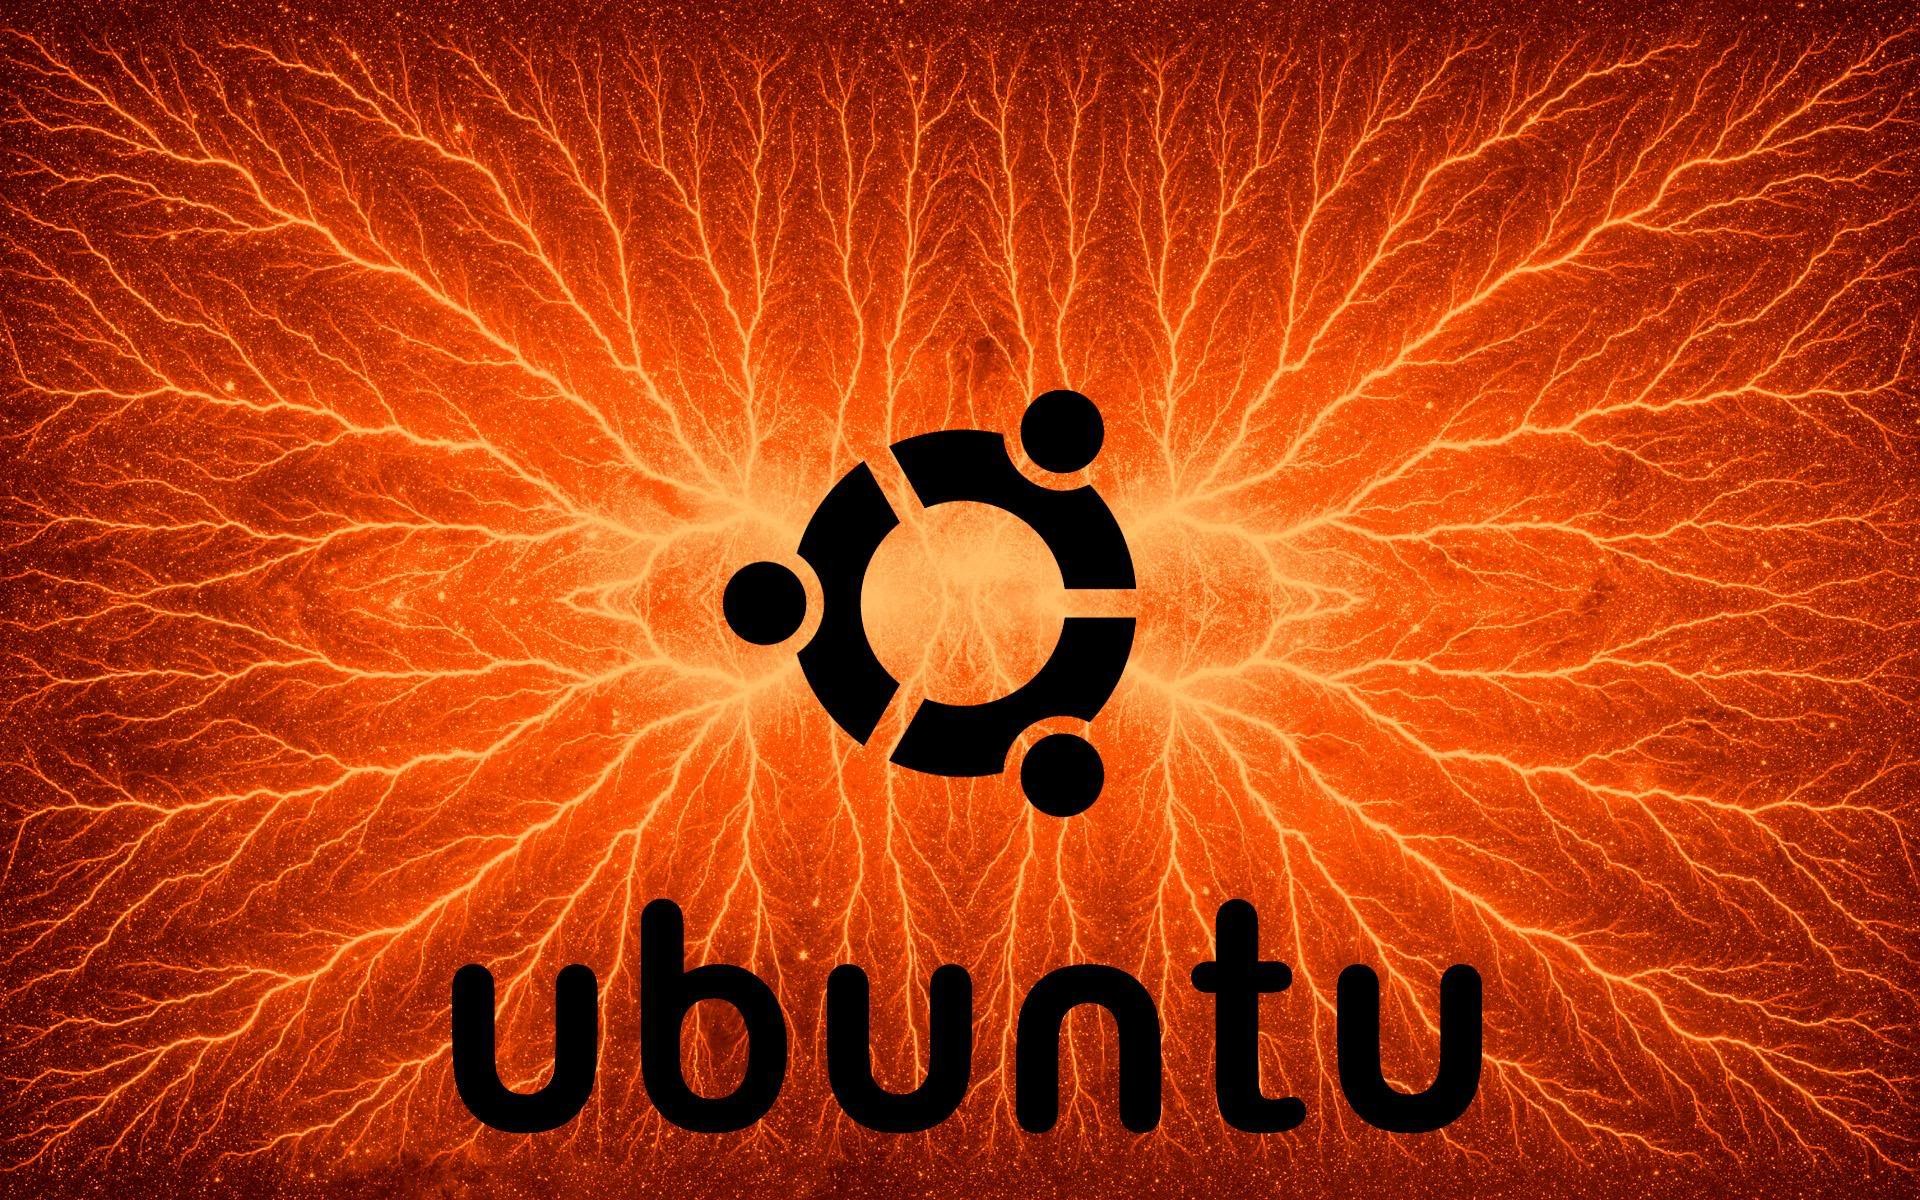 Free download wallpaper Technology, Ubuntu on your PC desktop